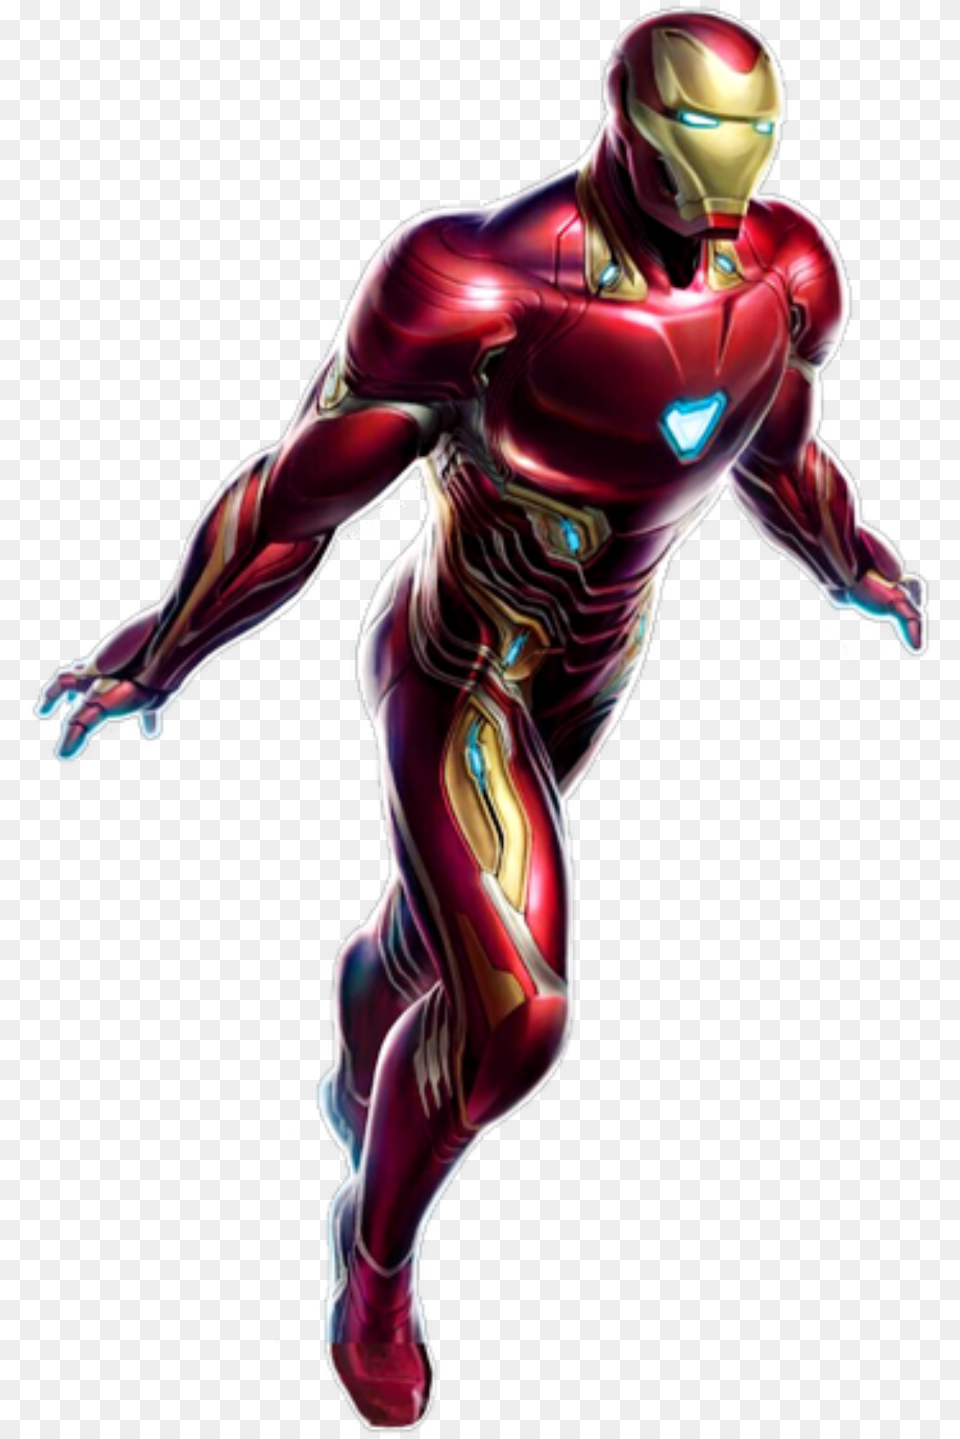 Ironman Tonystark Avengers Endgame Marvel Mcu Captain America Iron Man Avengers, Adult, Female, Person, Woman Png Image